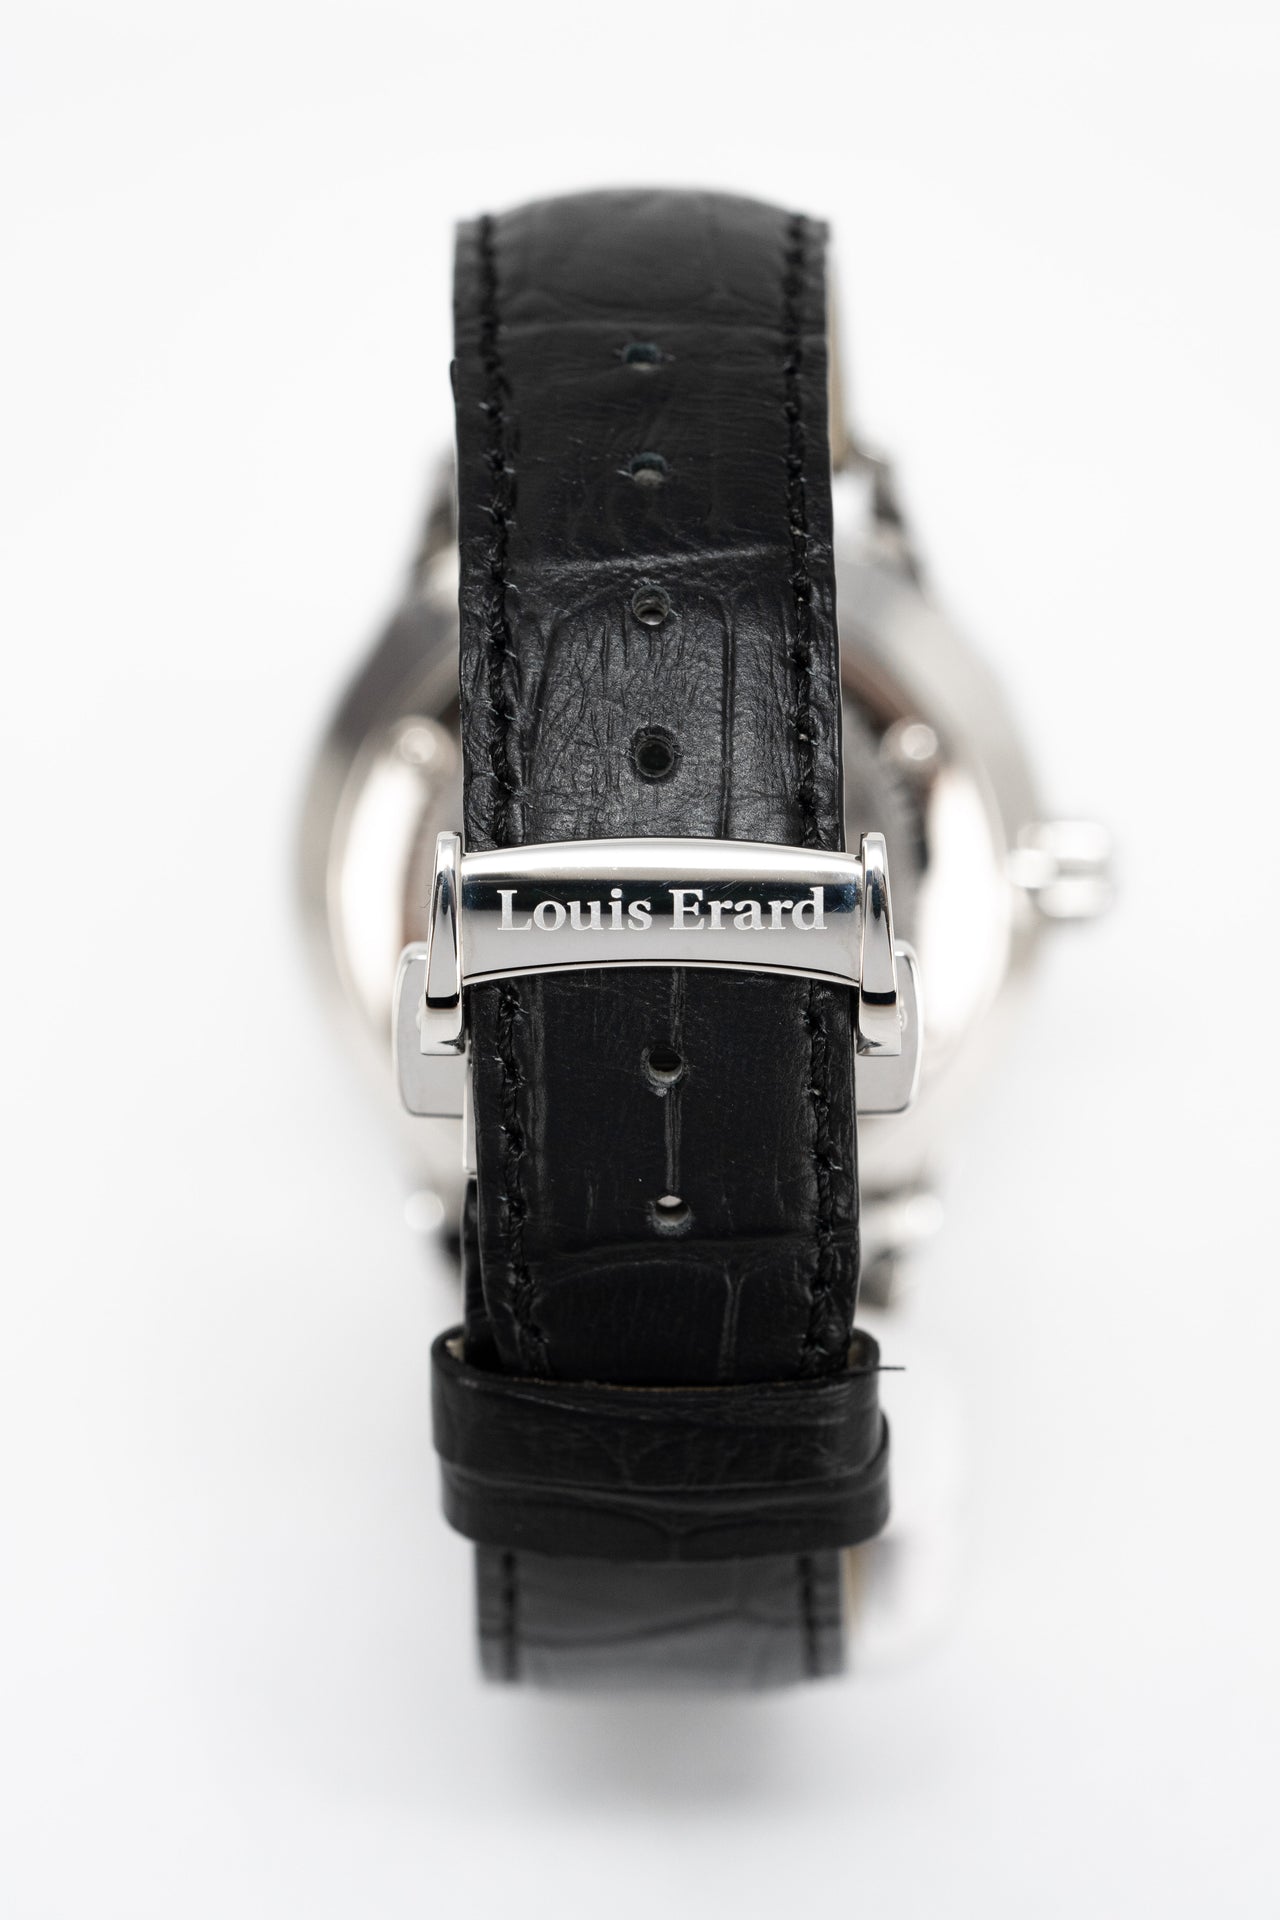 Louis Erard Men's Watch Automatic 1931 Moon Phase 31218AA21.BDC02